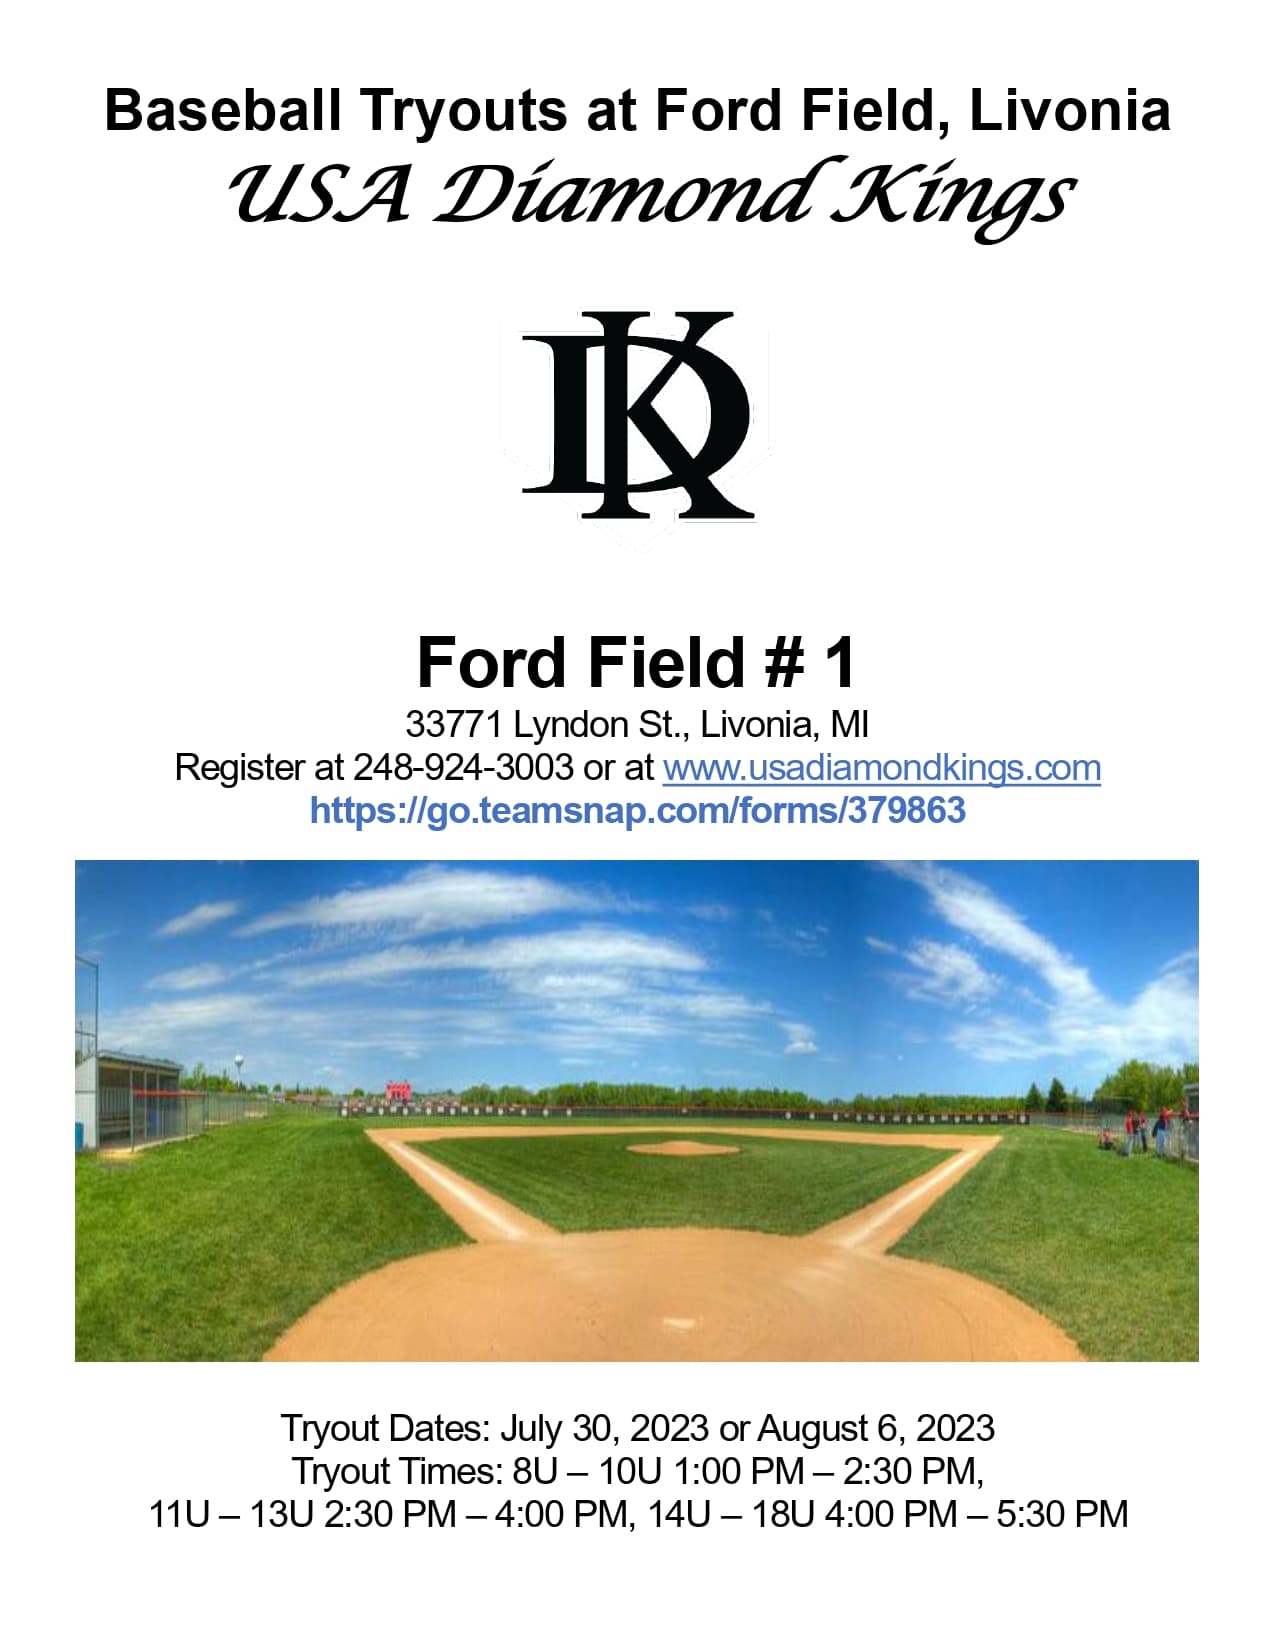 USA Diamond Kings - Ford Field # 1 Tryouts Flyer